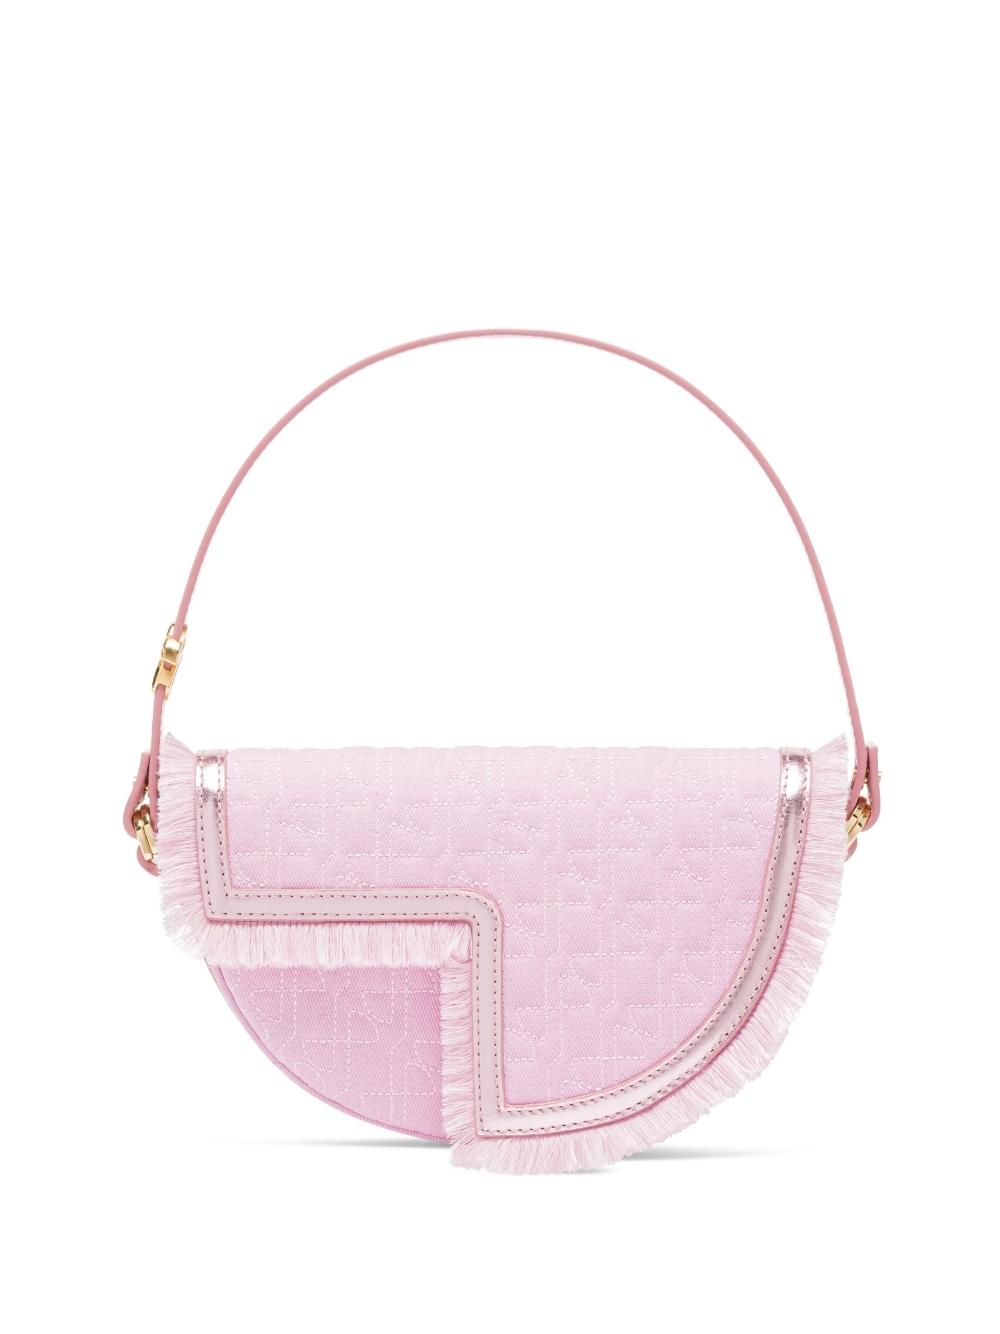 Patou X Sita Le Petit Shoulder Bag in Pink | Lyst